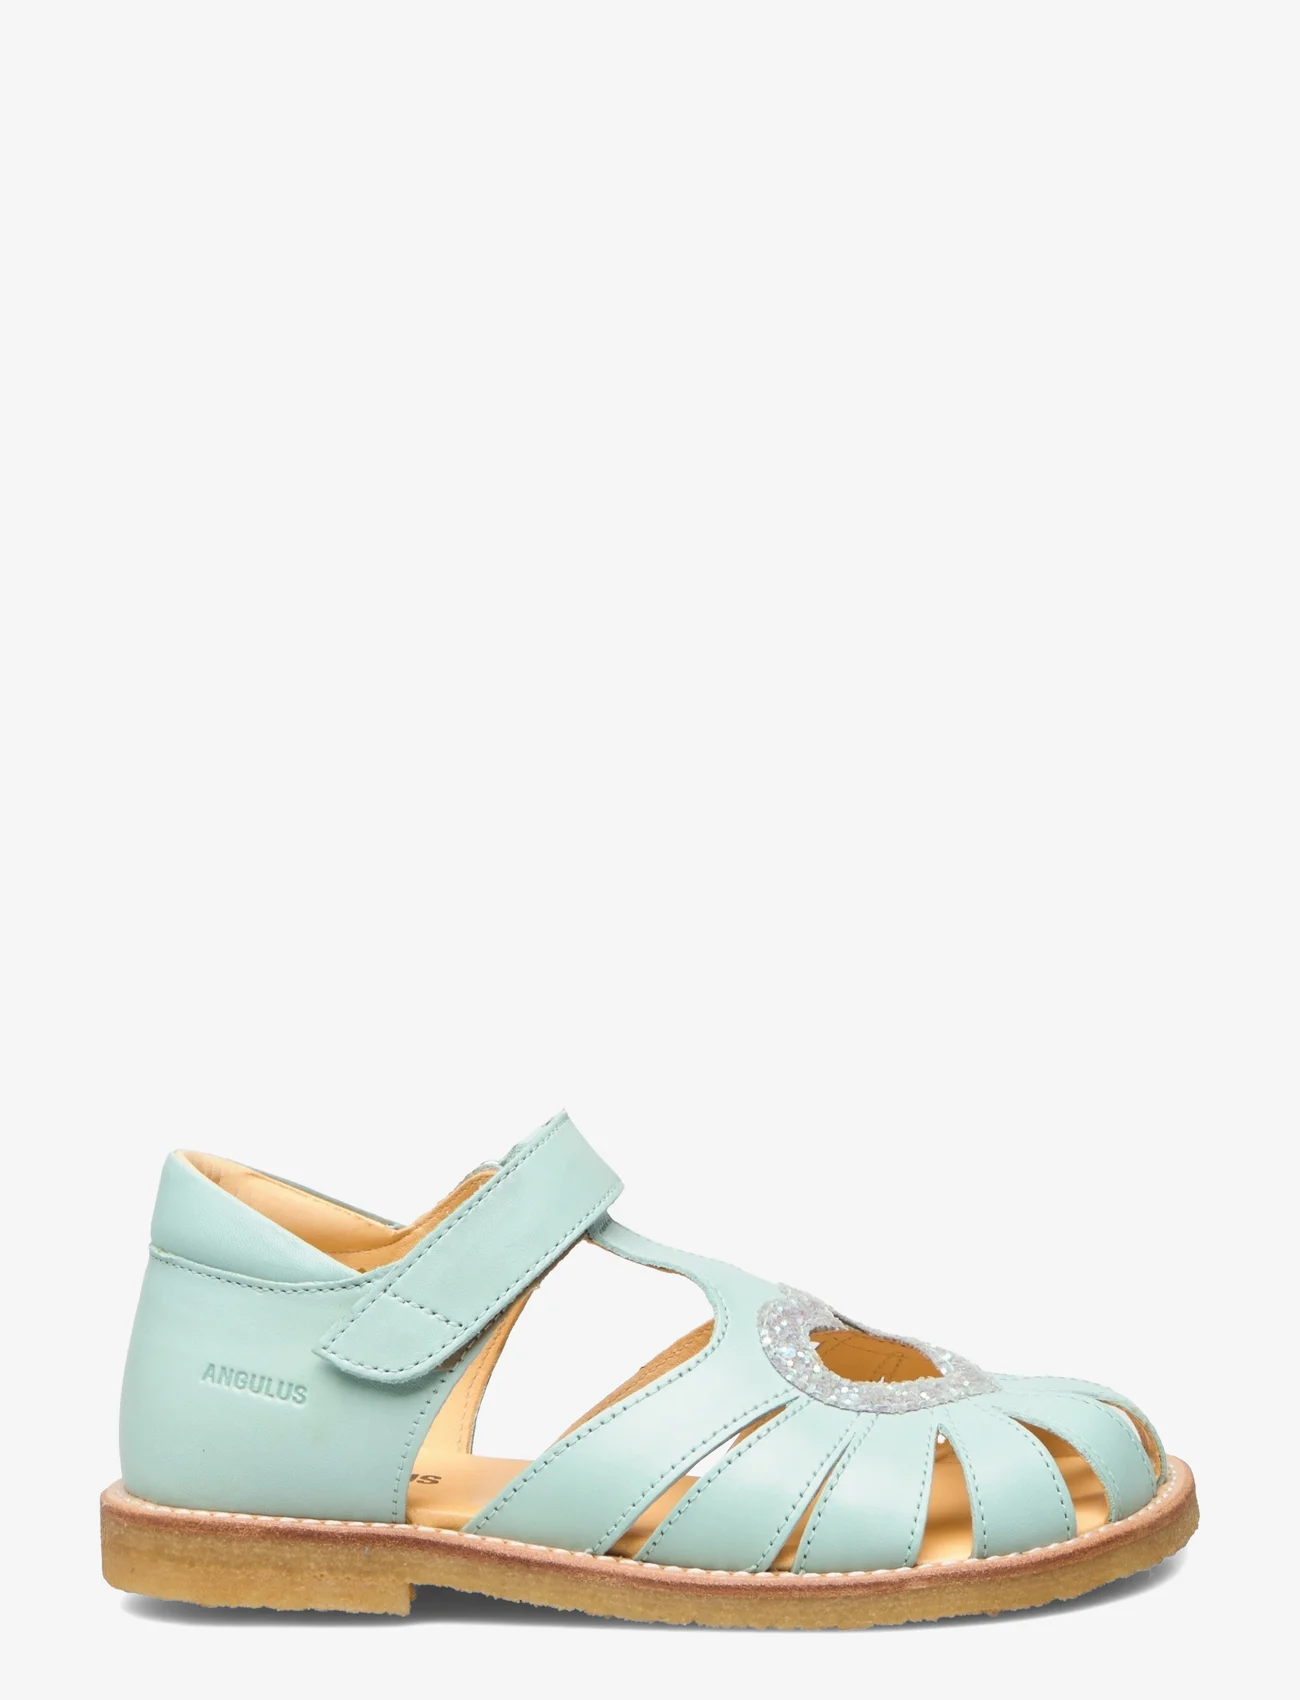 ANGULUS - Sandals - flat - closed toe - - sommerkupp - 1583/2697 mint/mint glitter - 1